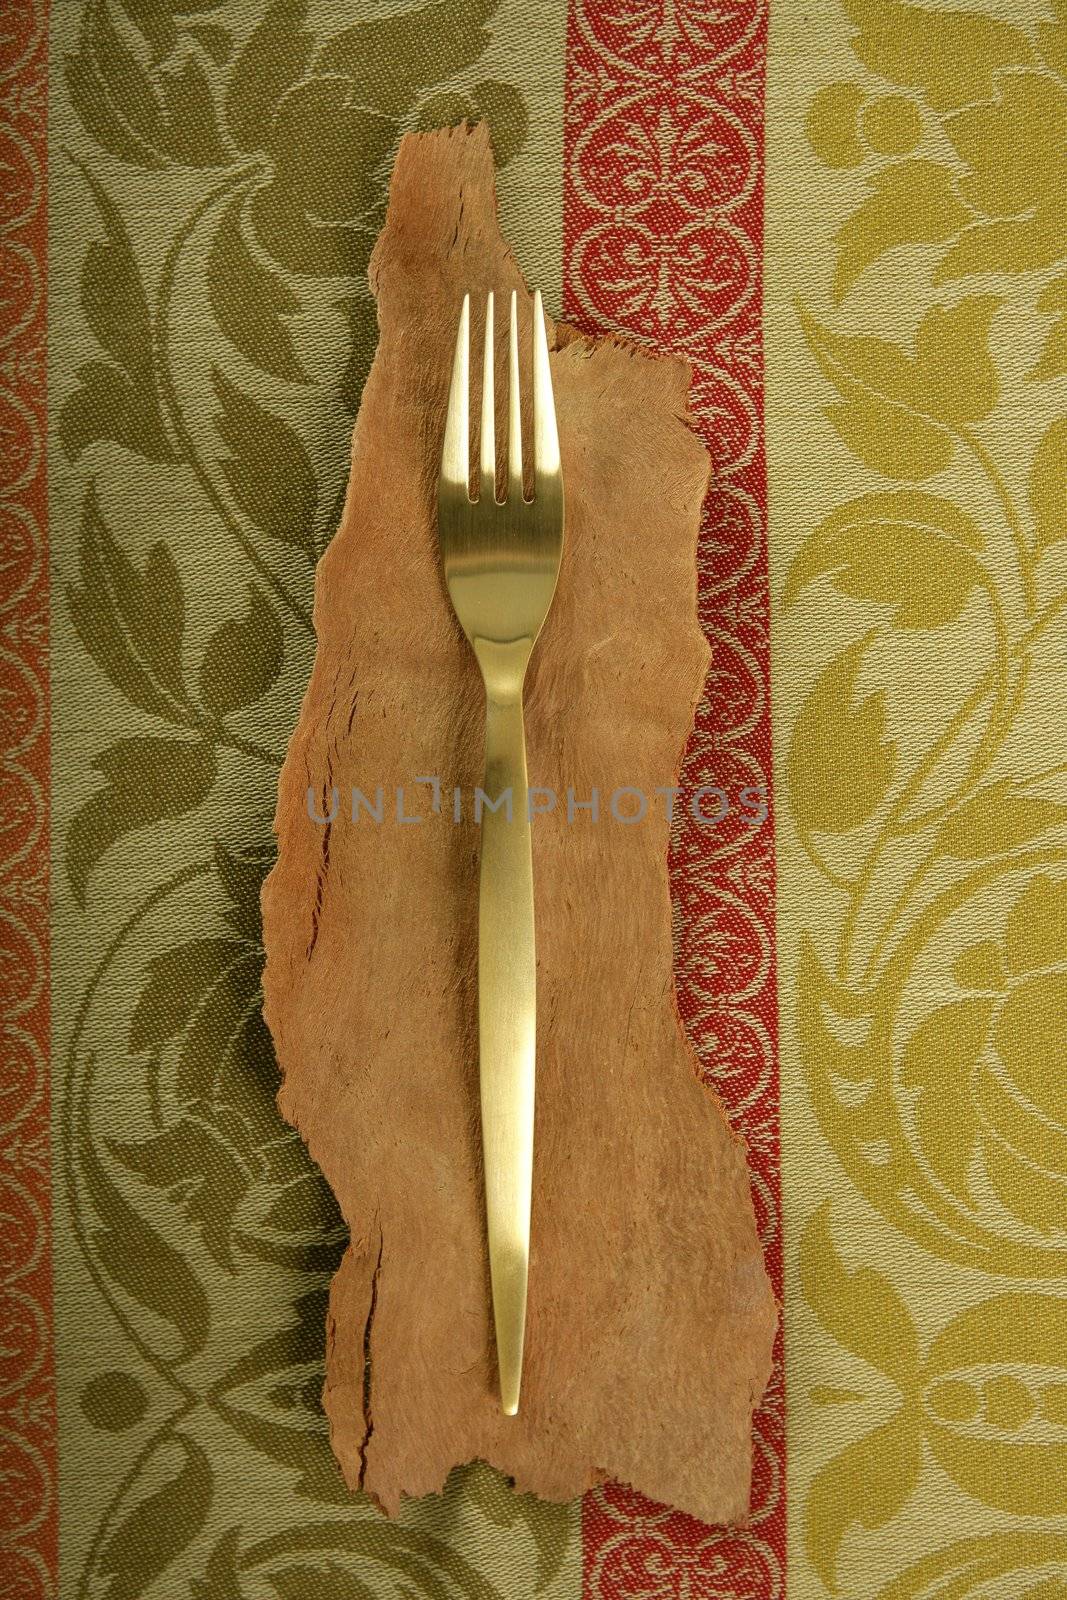 Golden fork over indian tablecloth